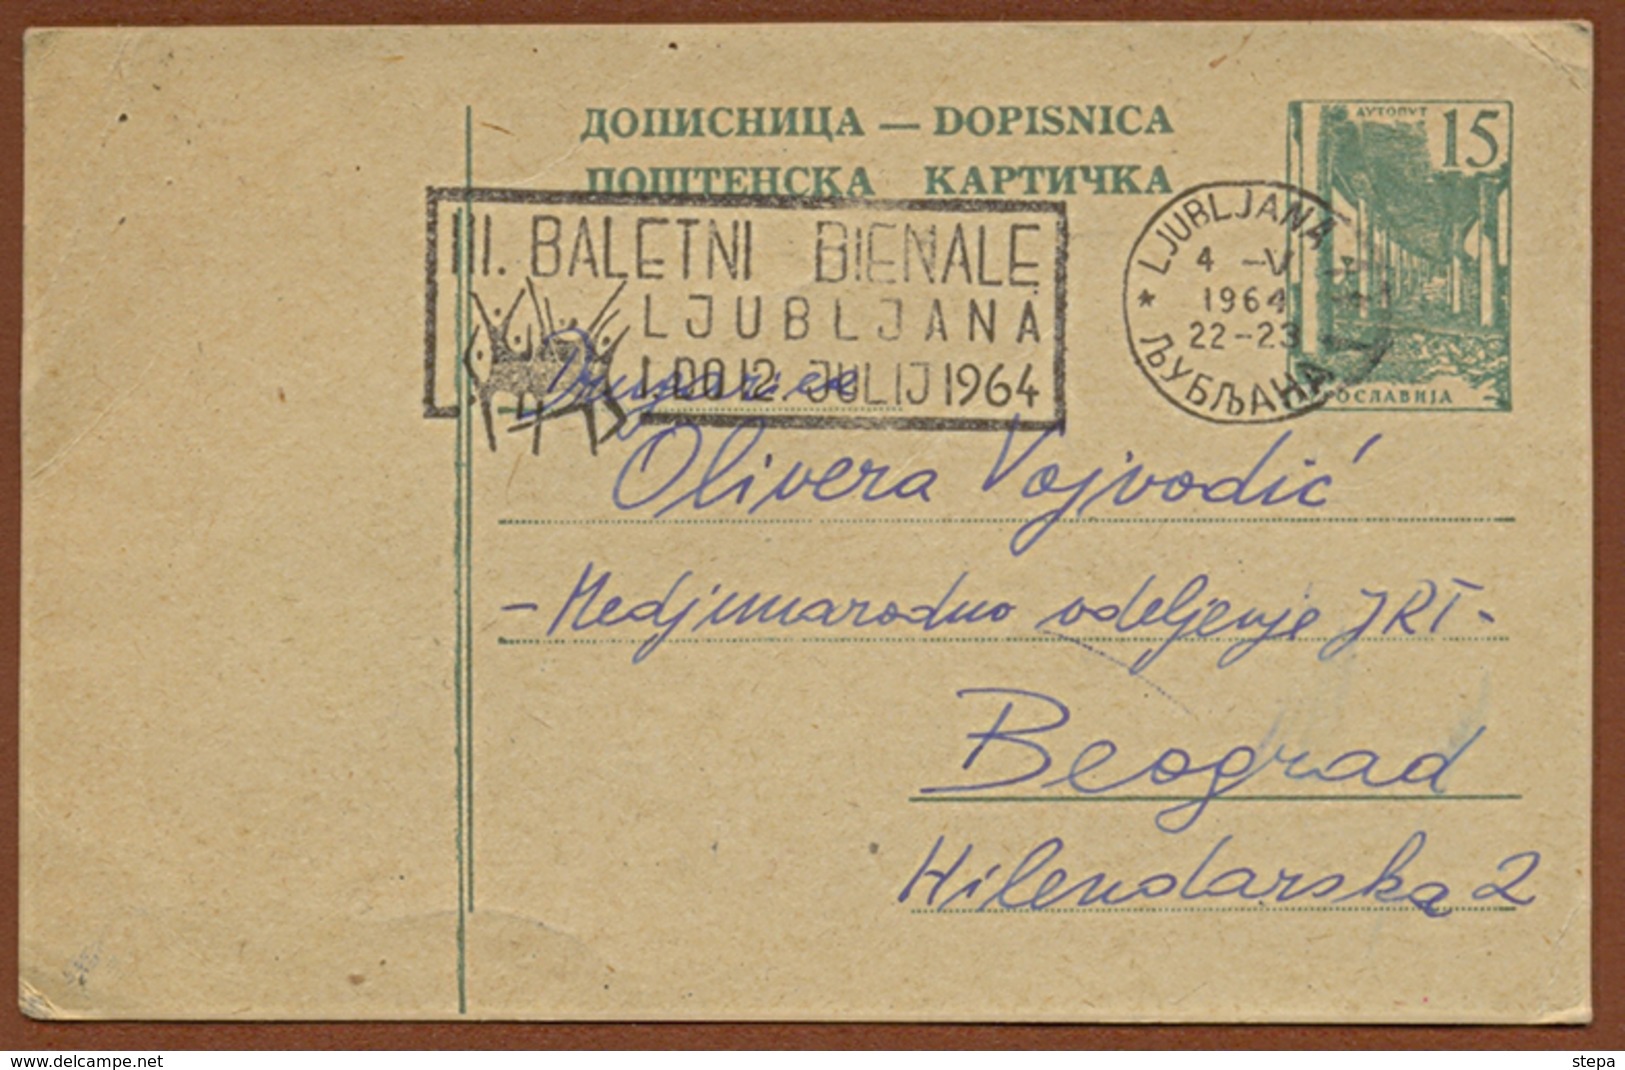 YUGOSLAVIA-SLOVENIA, LJUBLJANA-advertisement BALLET FLAMME 1964 RARE!!!!!!!!!!! - Covers & Documents